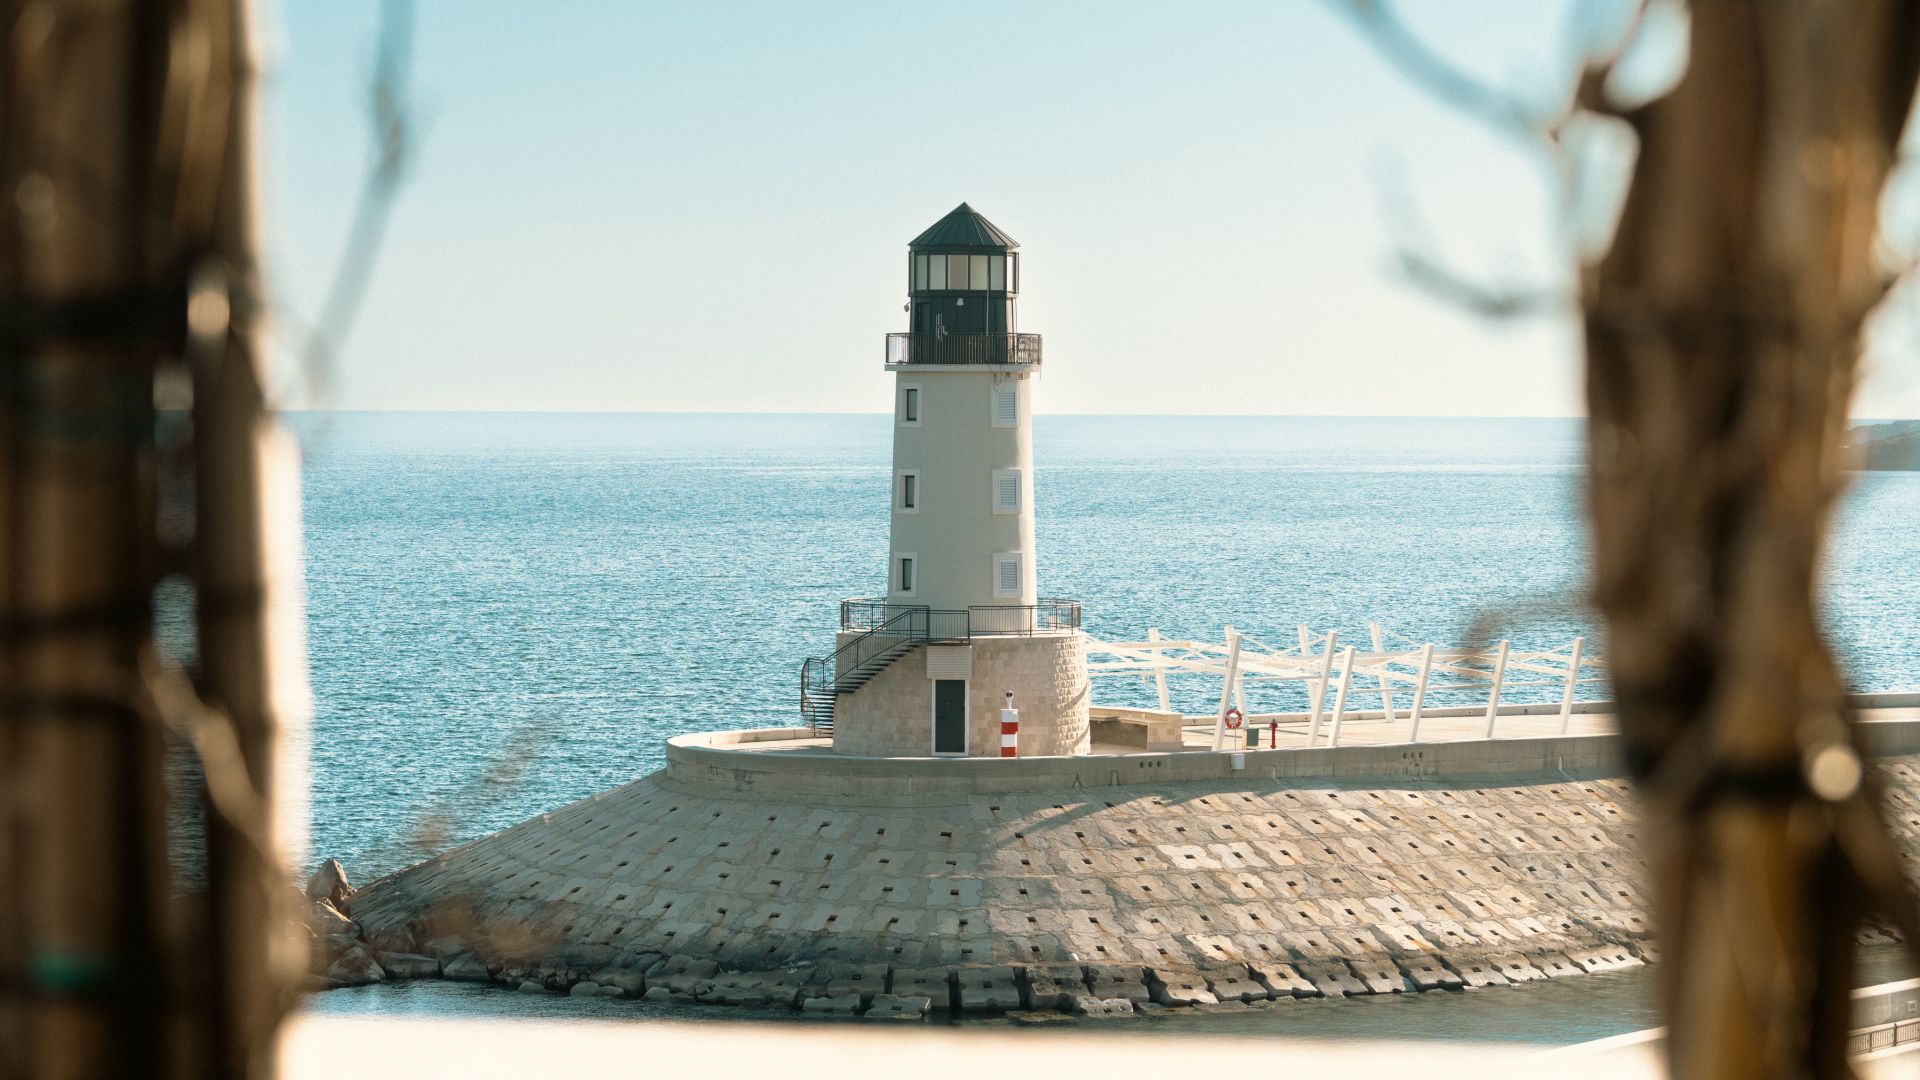 A Lighthouse On A Pier